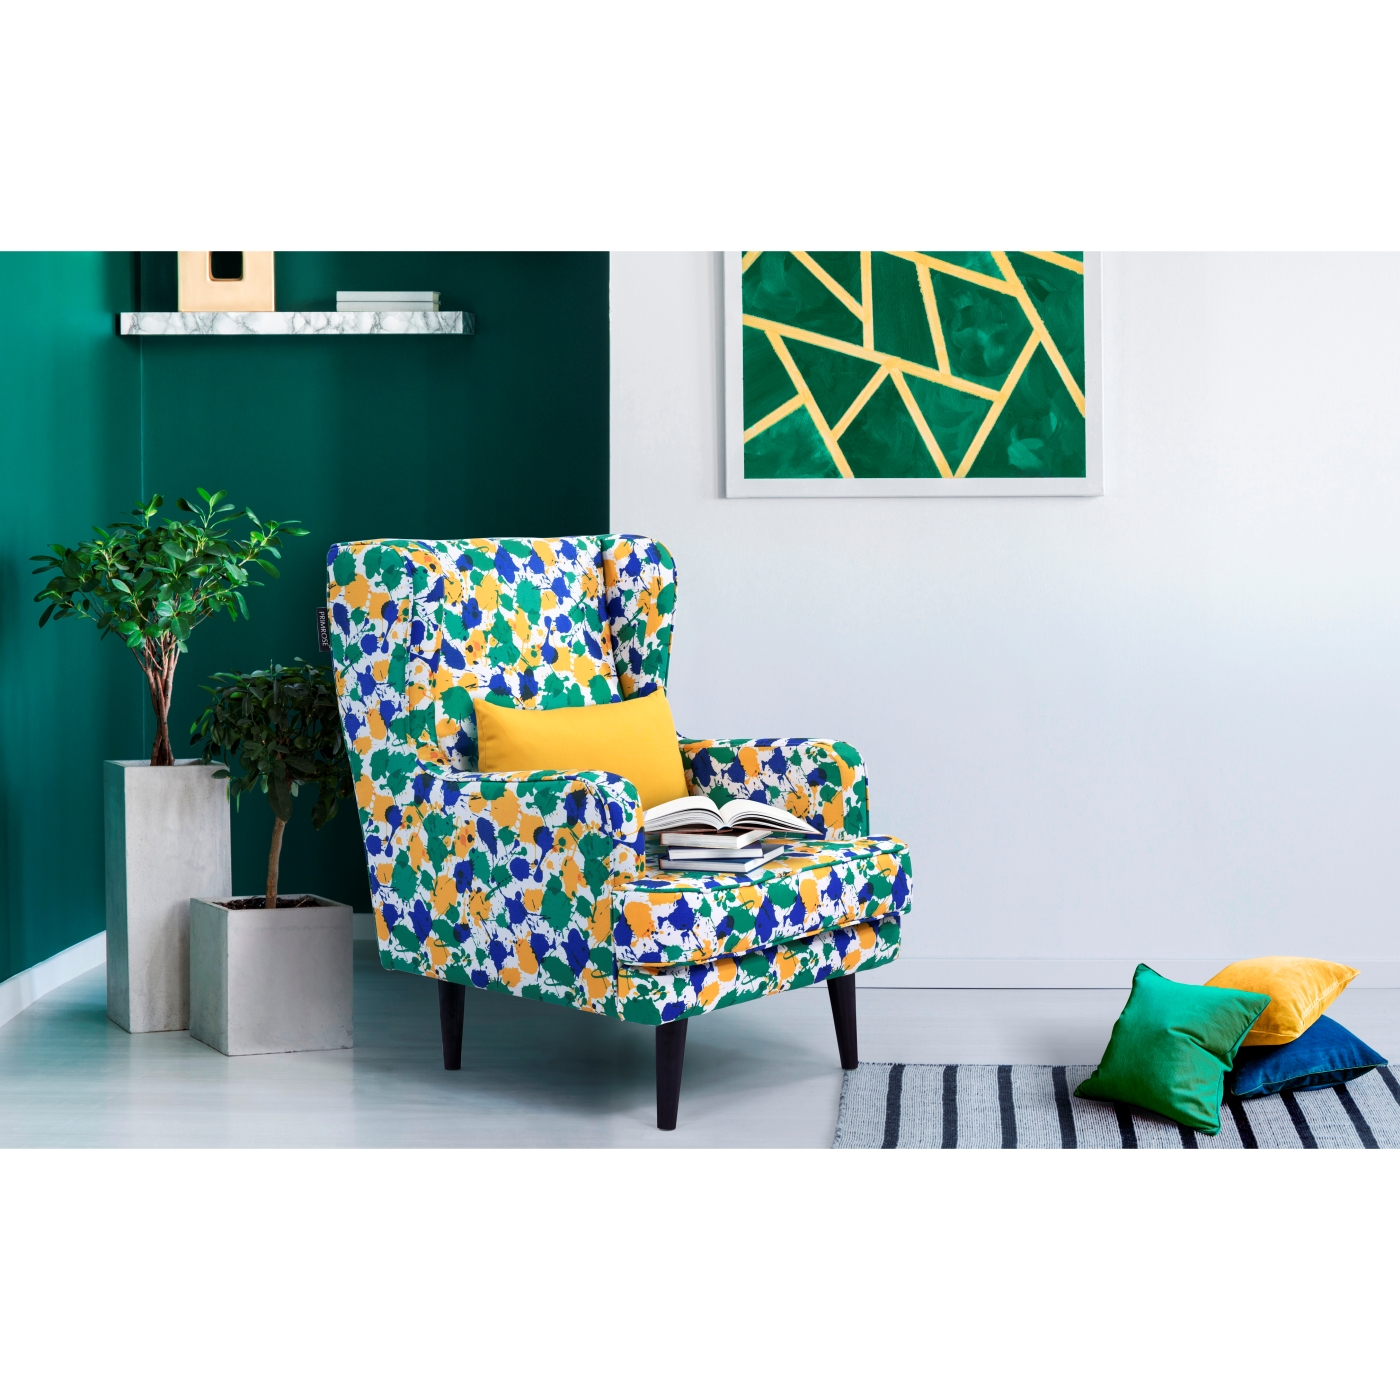 PRIMROSE Splash Flower Digital Printed Faux Linen Fabric High Back Wing Chair - Green, Yellow  